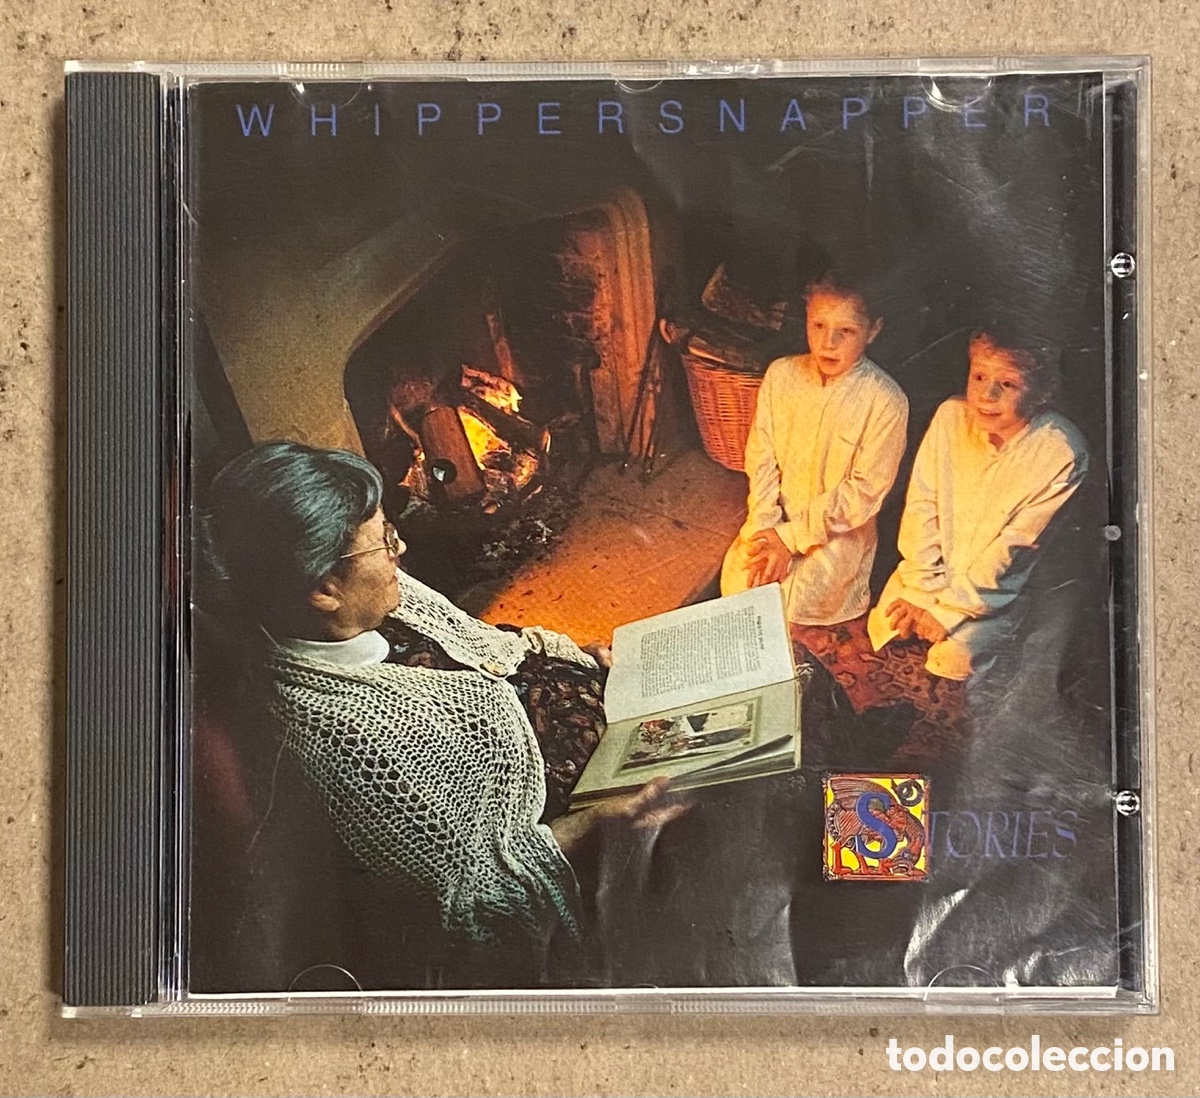 cd. whippersnapper “stories” (wps records 1991) - Compra venta en  todocoleccion